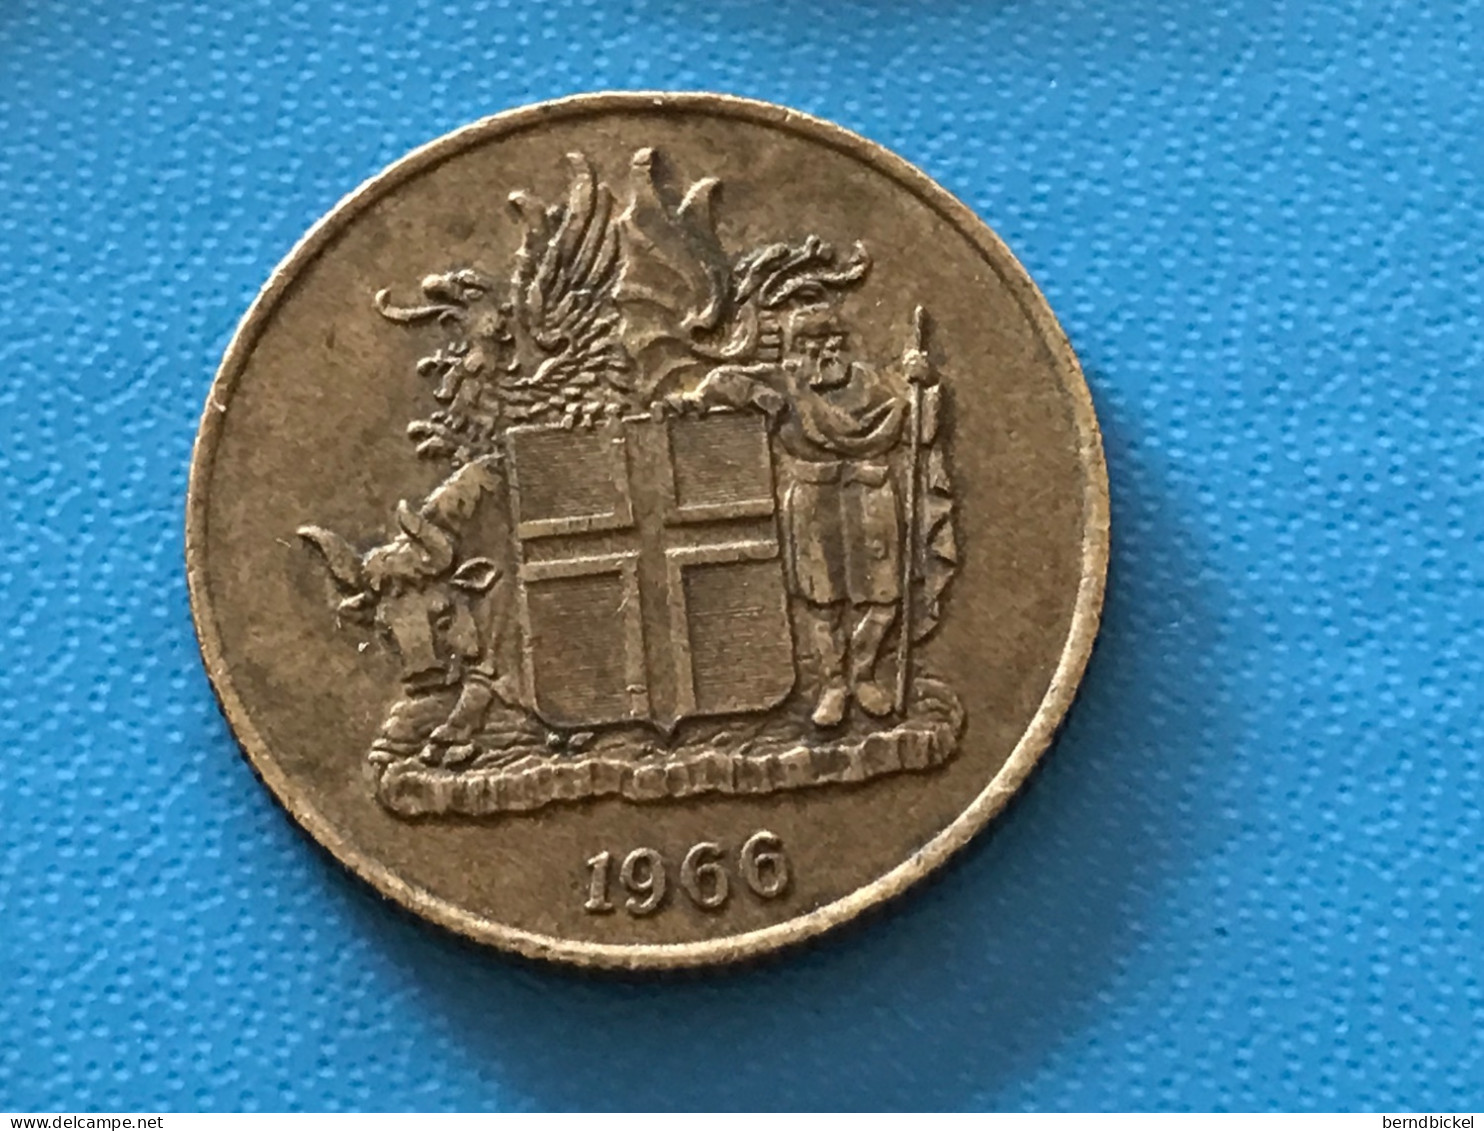 Münze Münzen Umlaufmünze Island 1 Krone 1966 - Island